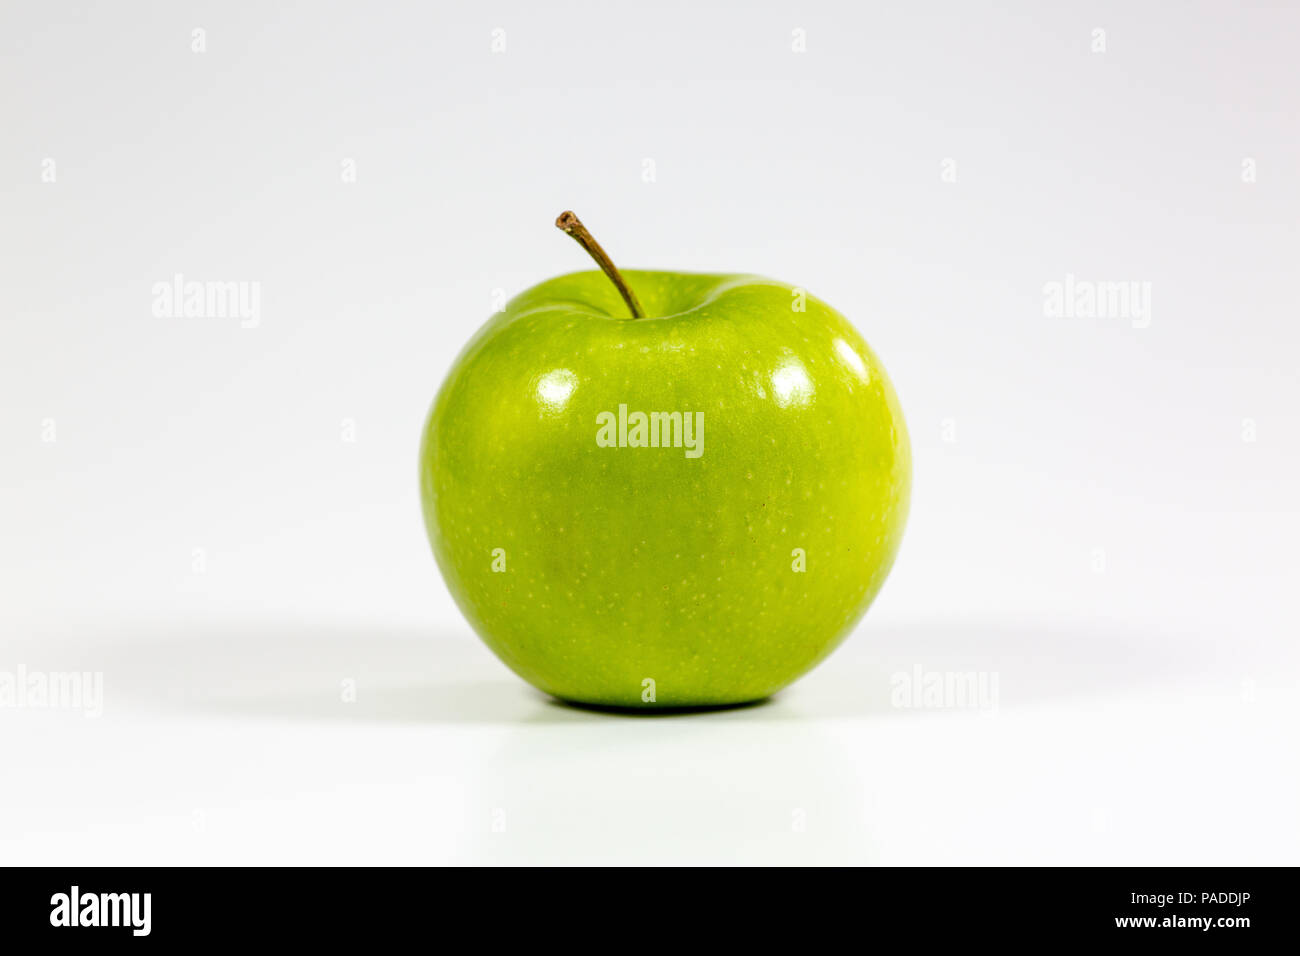 https://c8.alamy.com/comp/PADDJP/single-tasty-green-apple-on-a-kitchen-counter-PADDJP.jpg